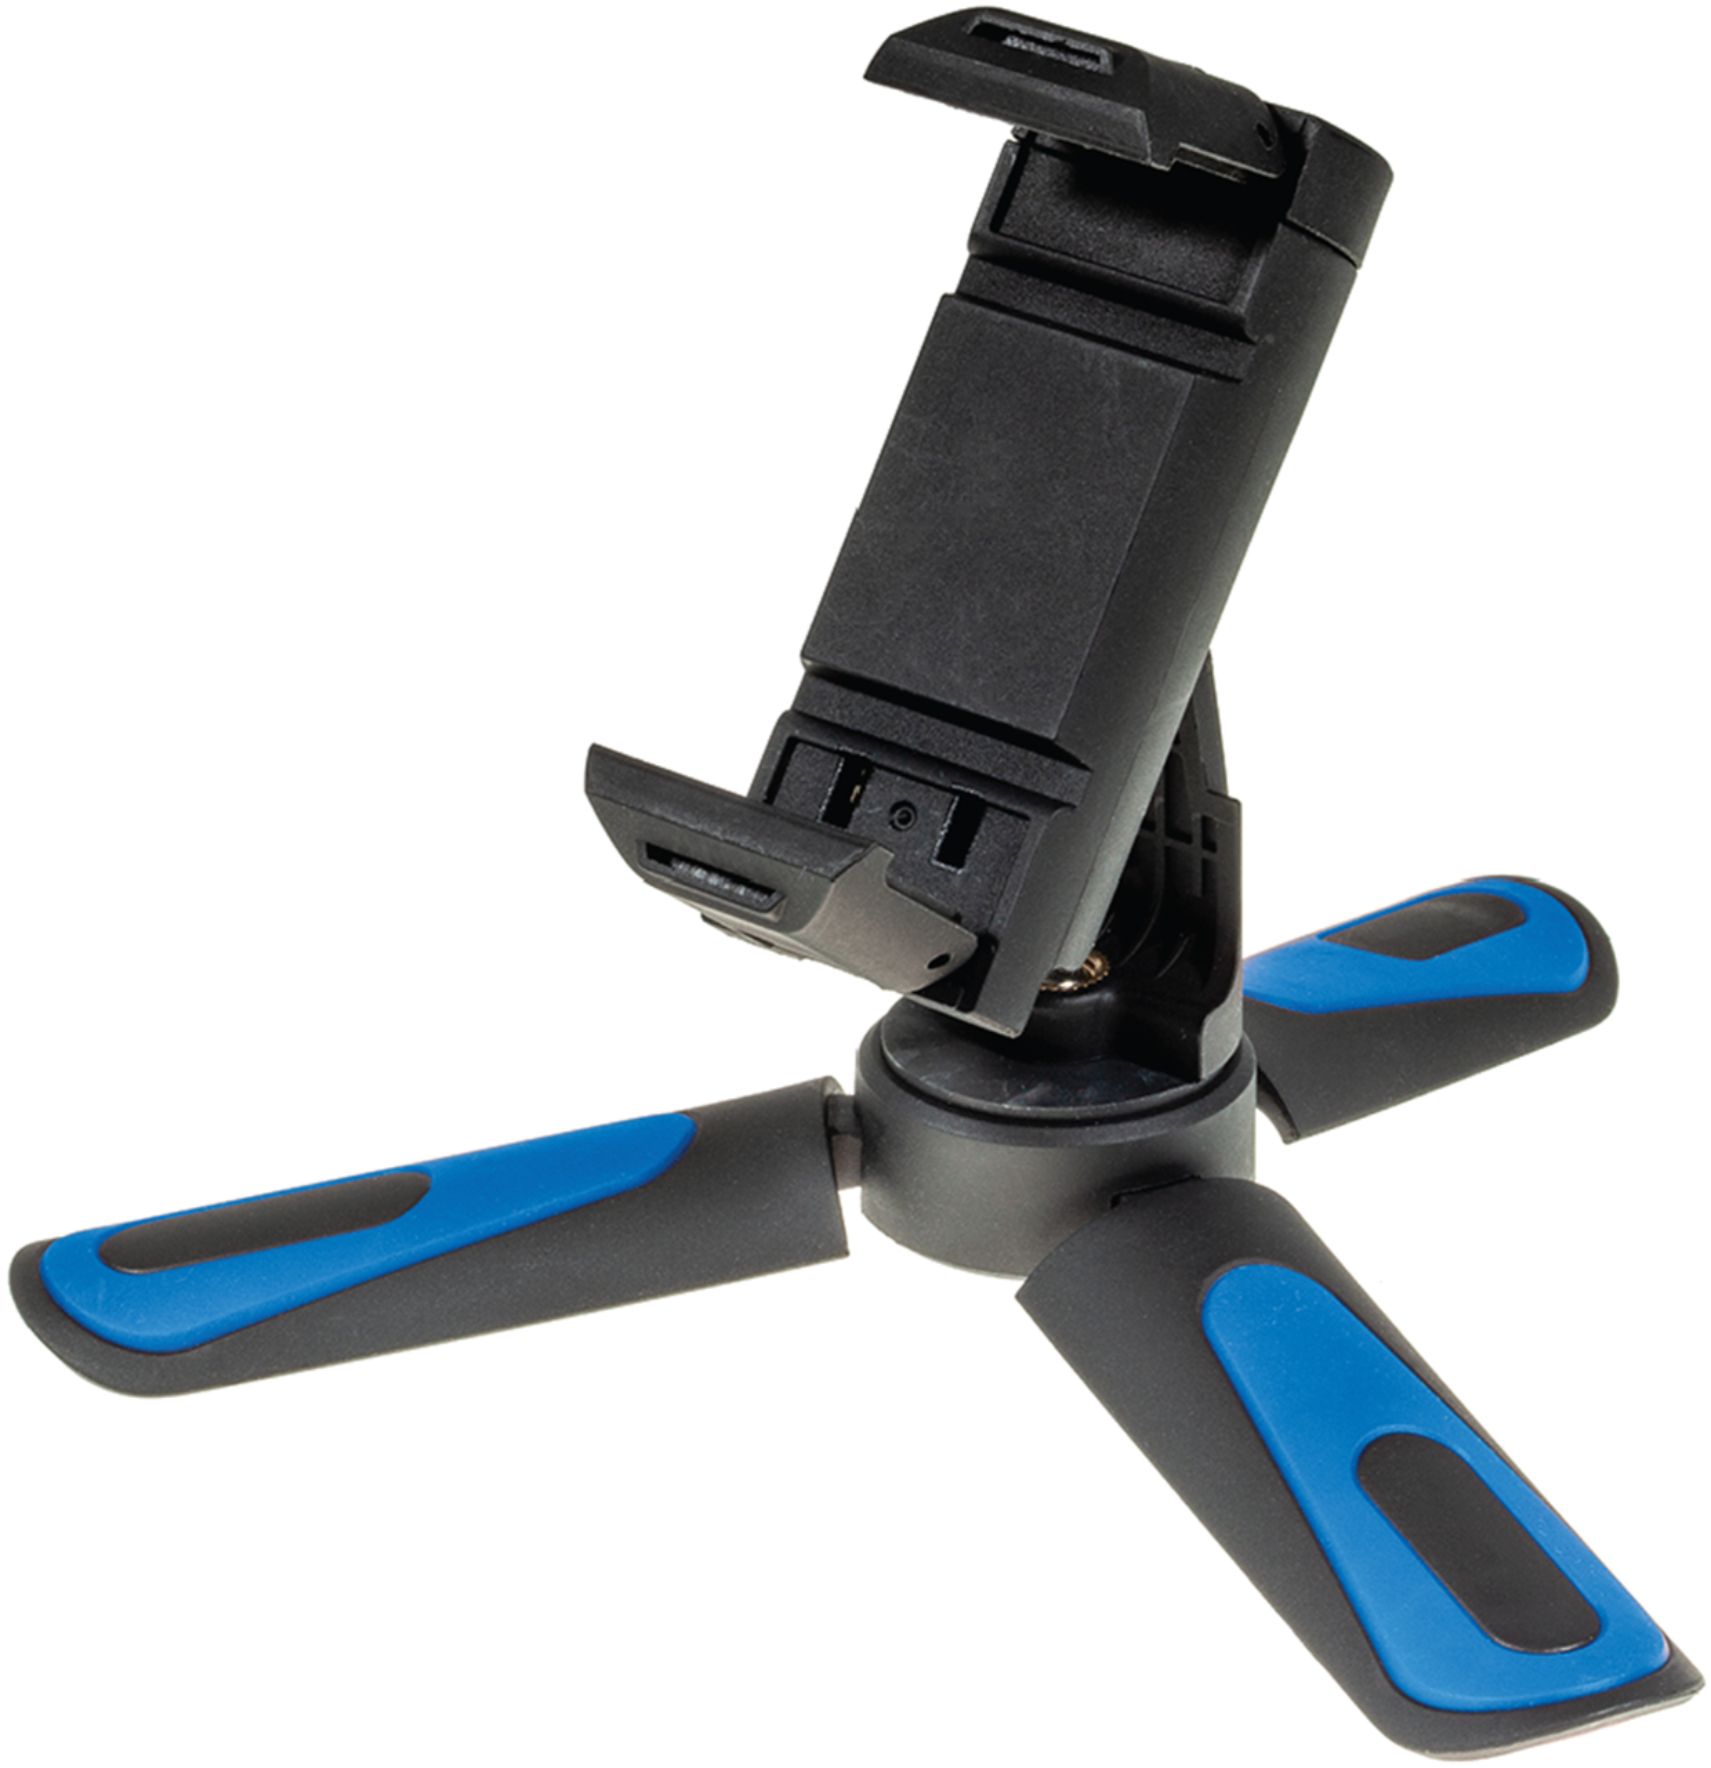 Sunpak - PocketPod Smartphone Tabletop Holder - Black/Blue